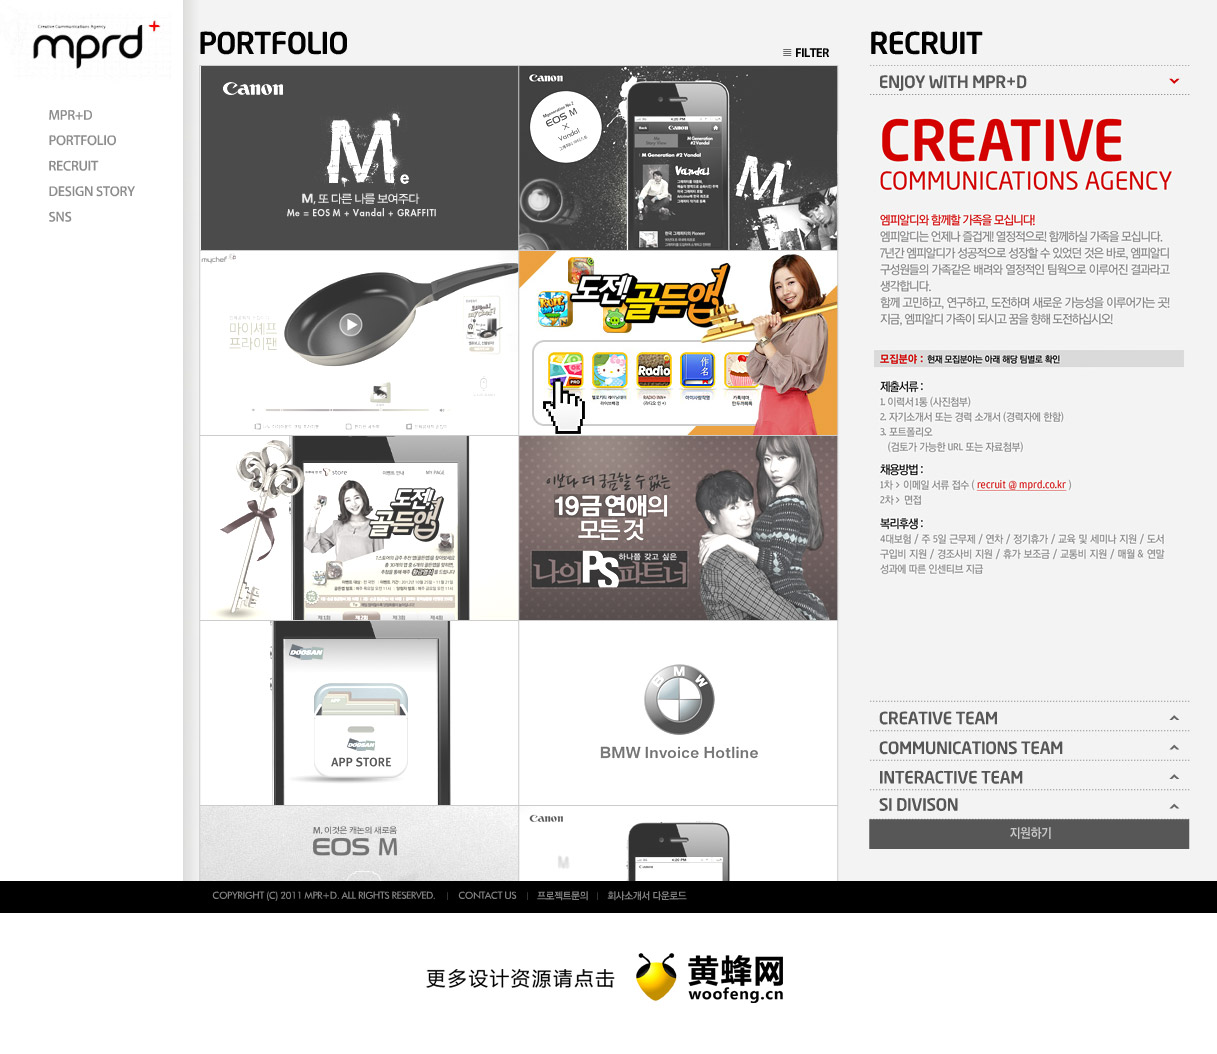 MPR+D韩国设计公司，来源自黄蜂网https://woofeng.cn/web/